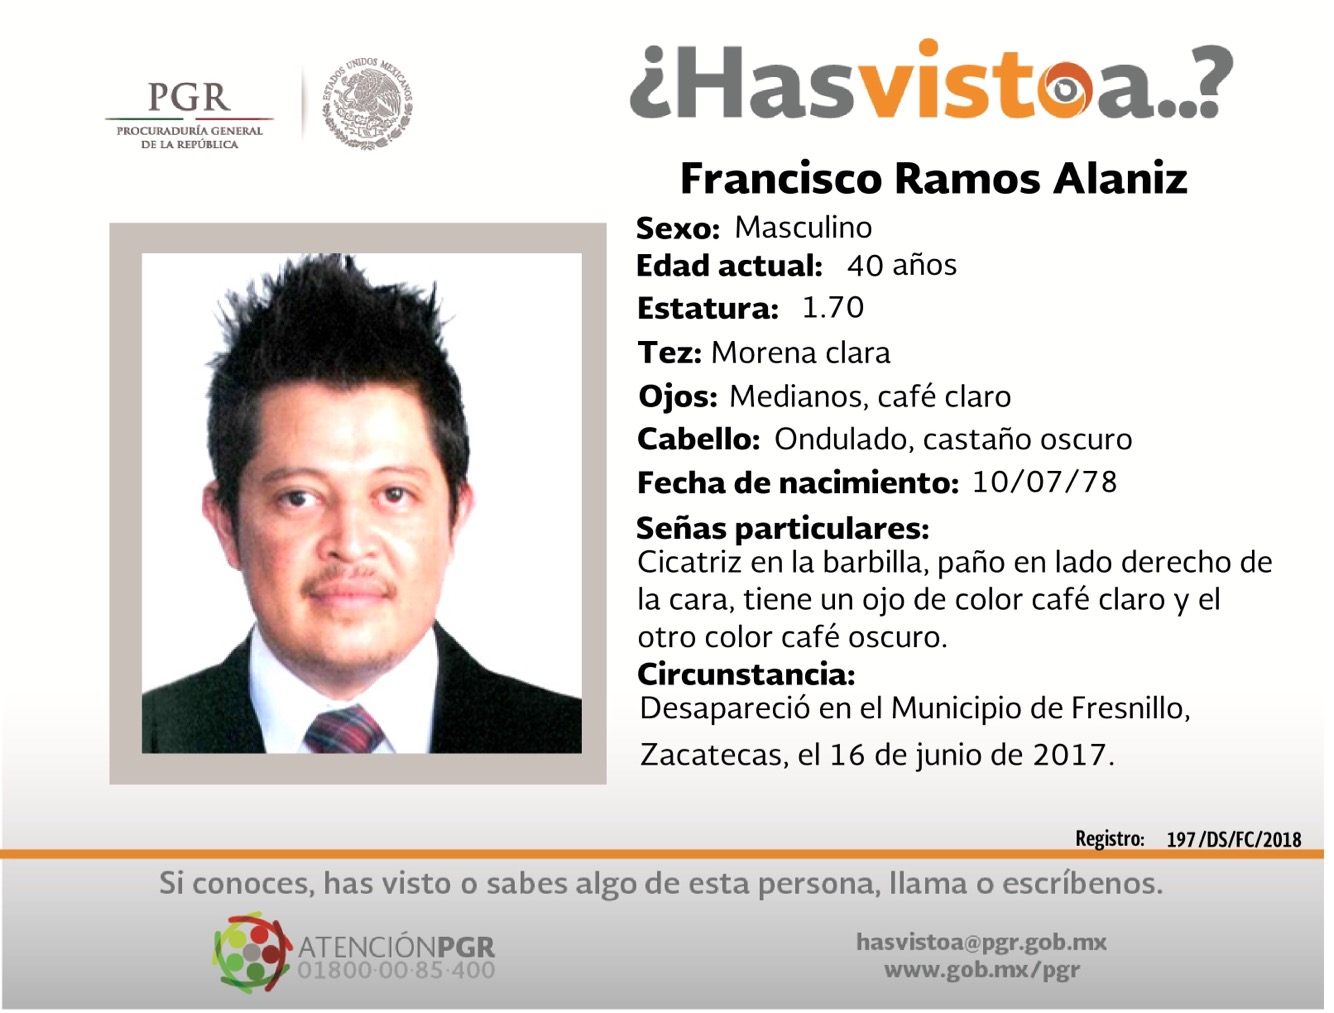 #SeBusca Ayudanos a localizar a Francisco Ramos